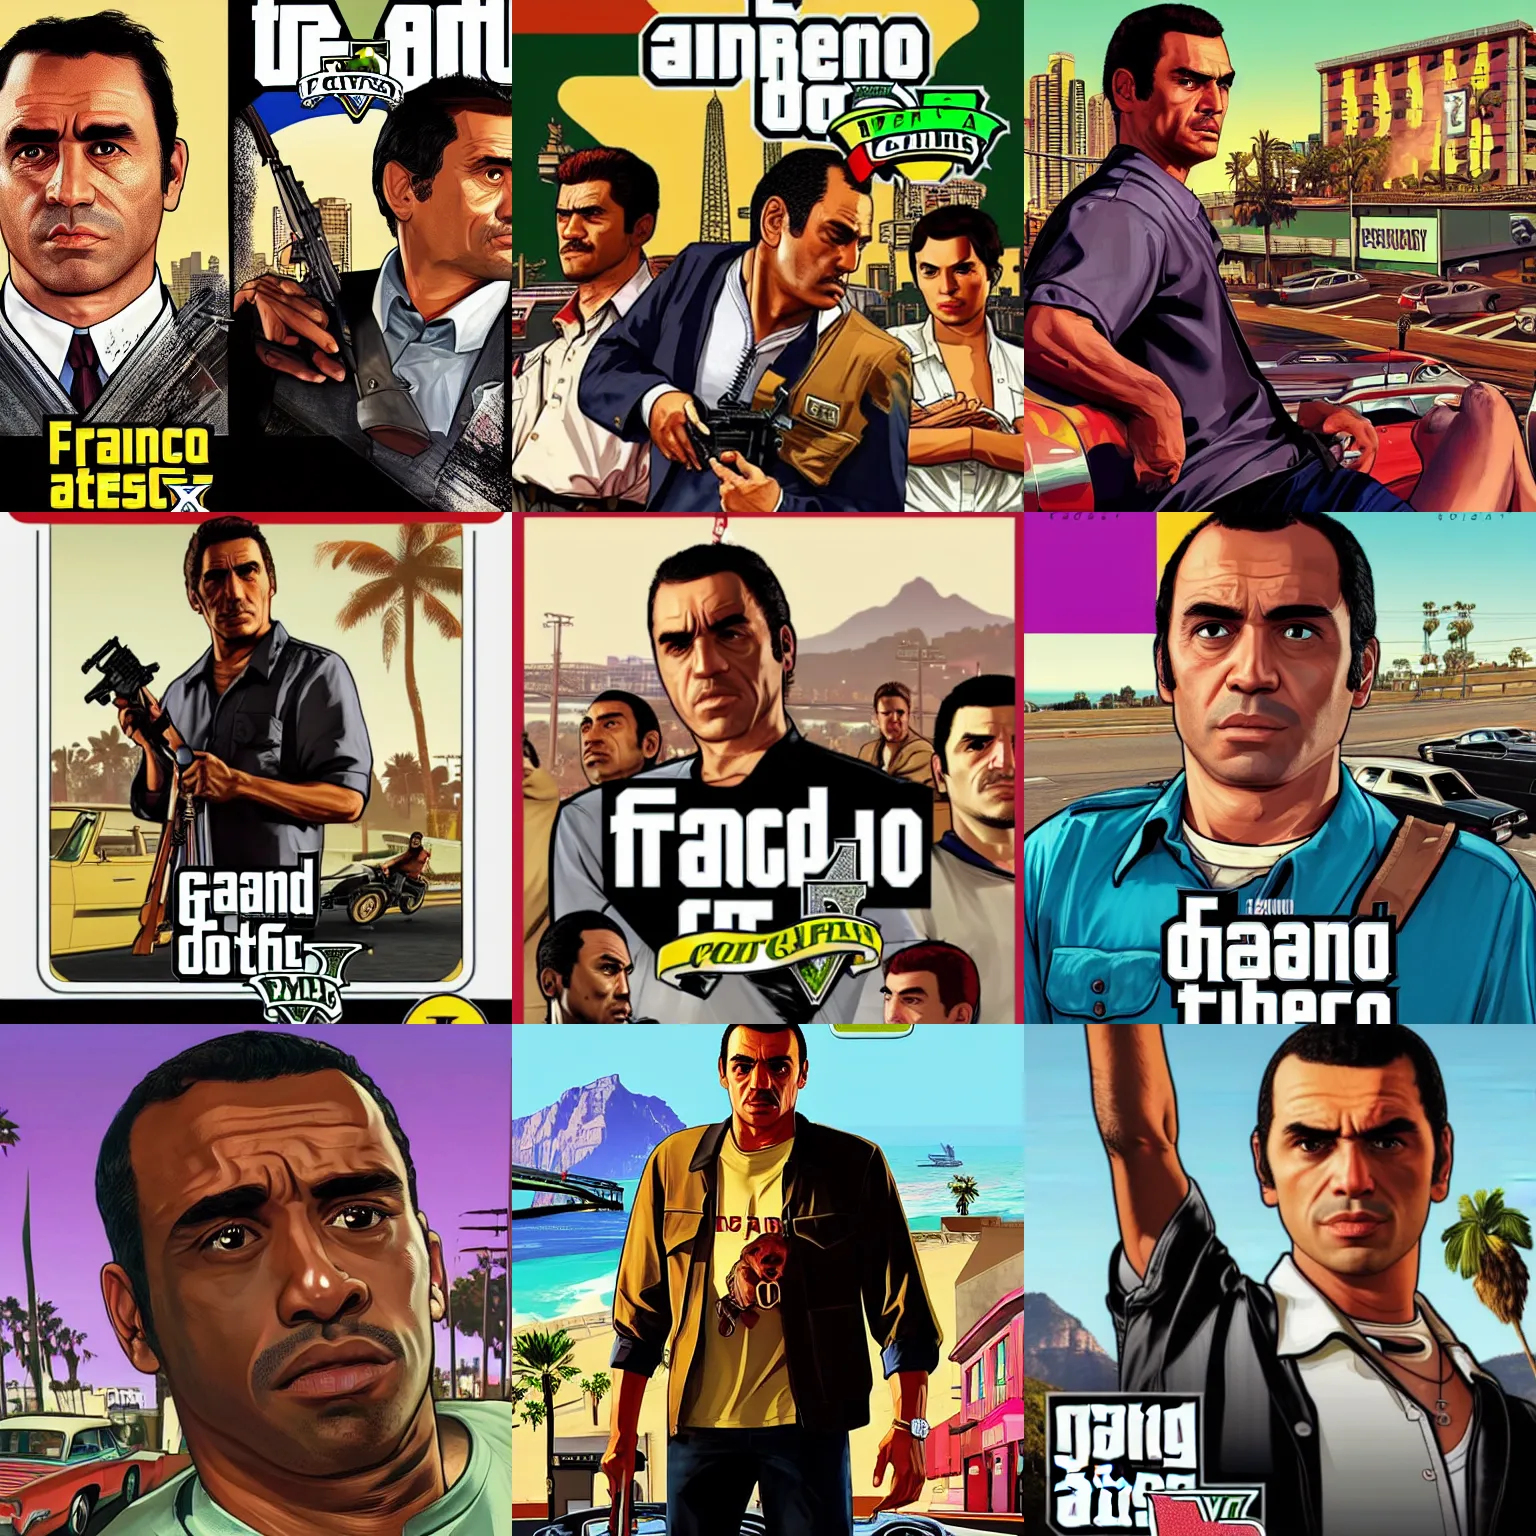 Prompt: Franco on GTA V cover art